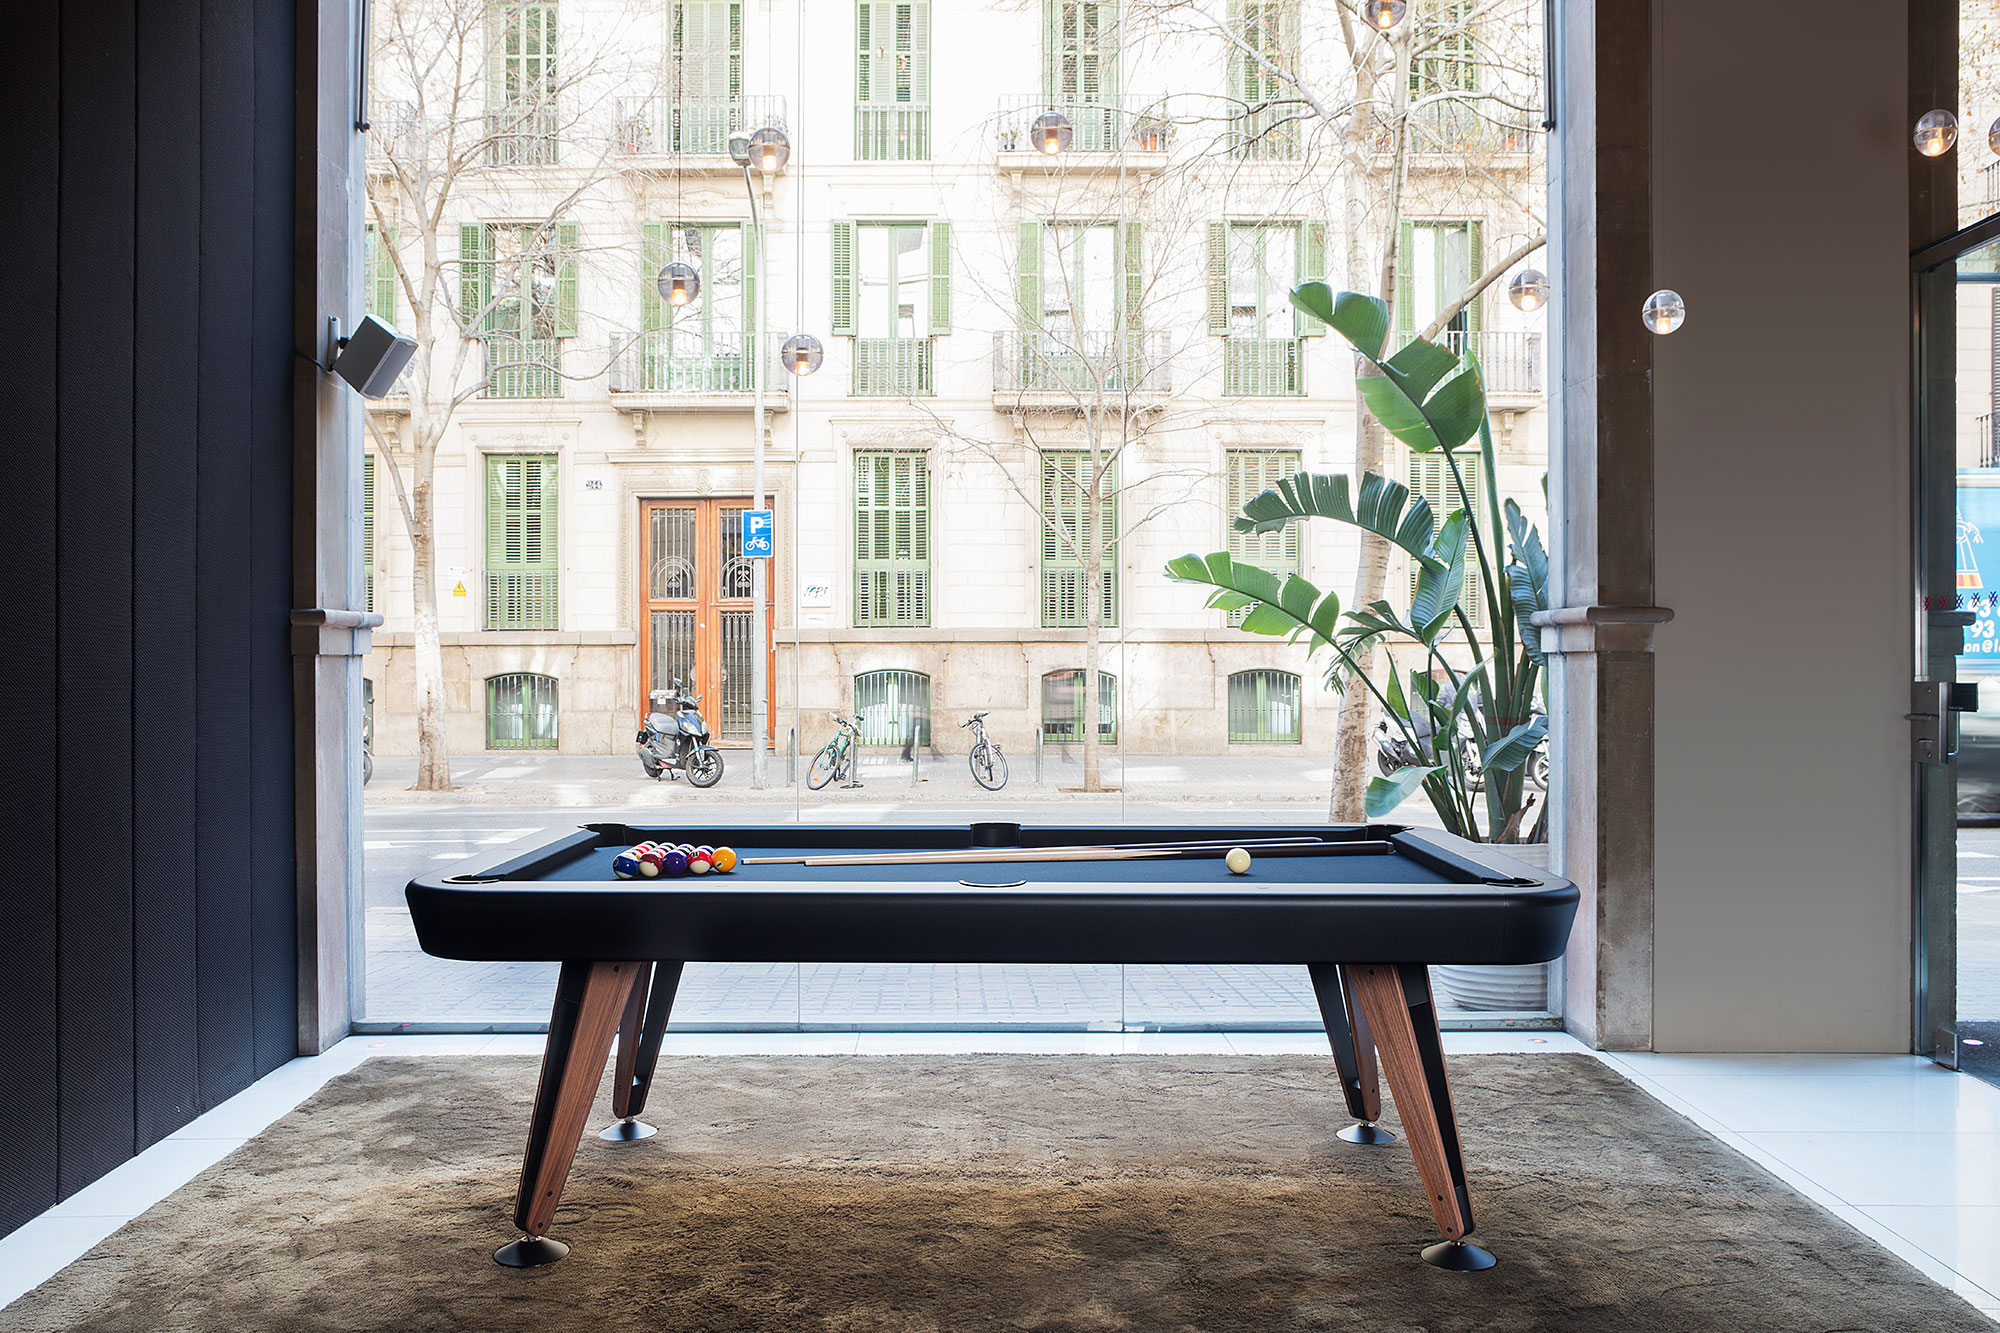 Billardtisch "Pool" - Design Diagonal American 7Fuss von RS Barcelona